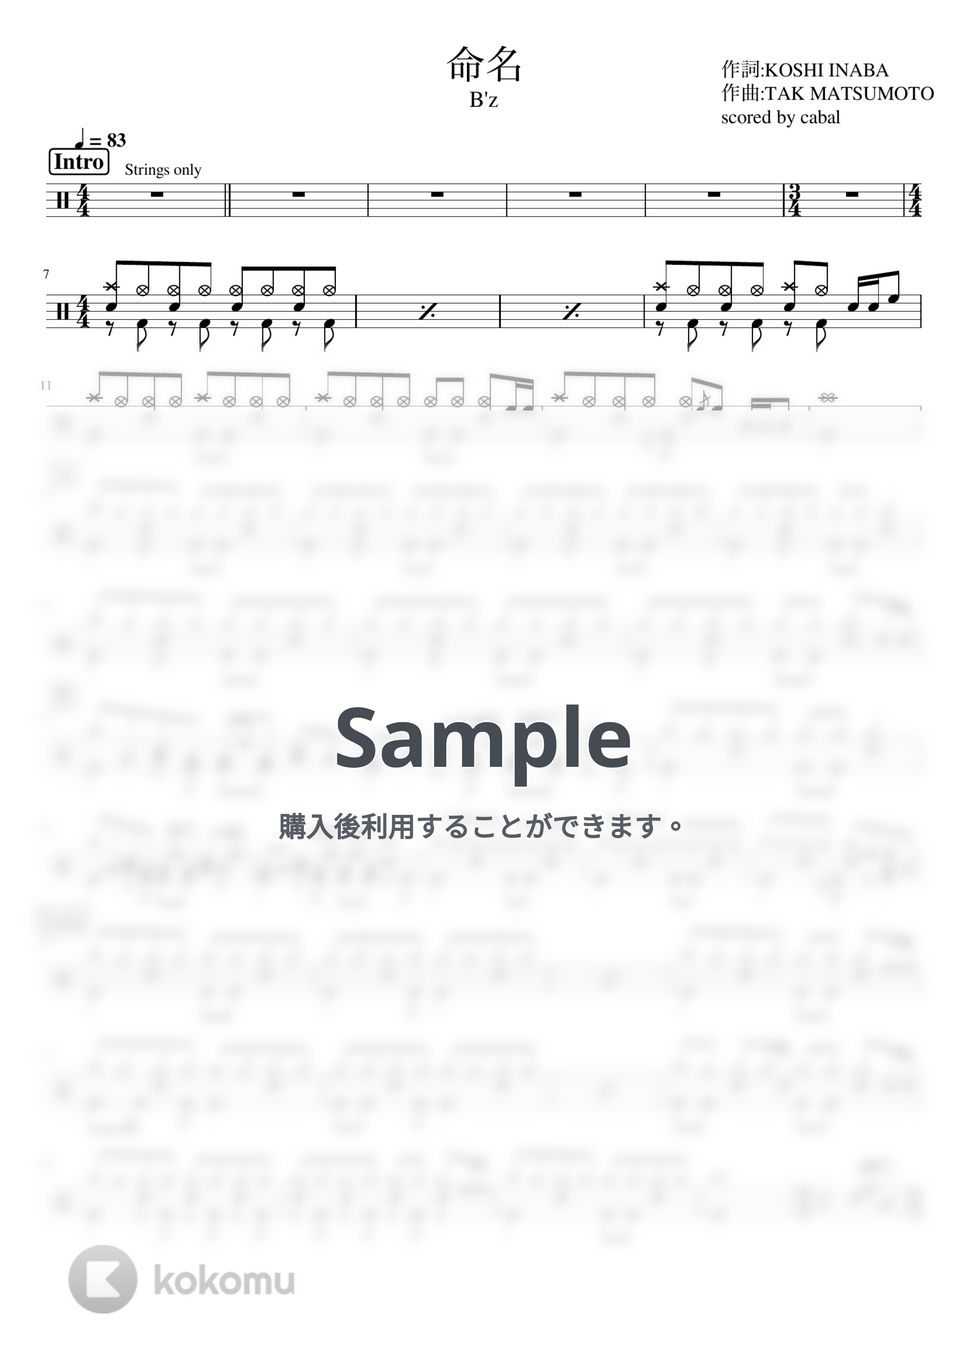 B'z - 命名 (ドラム譜面) by cabal